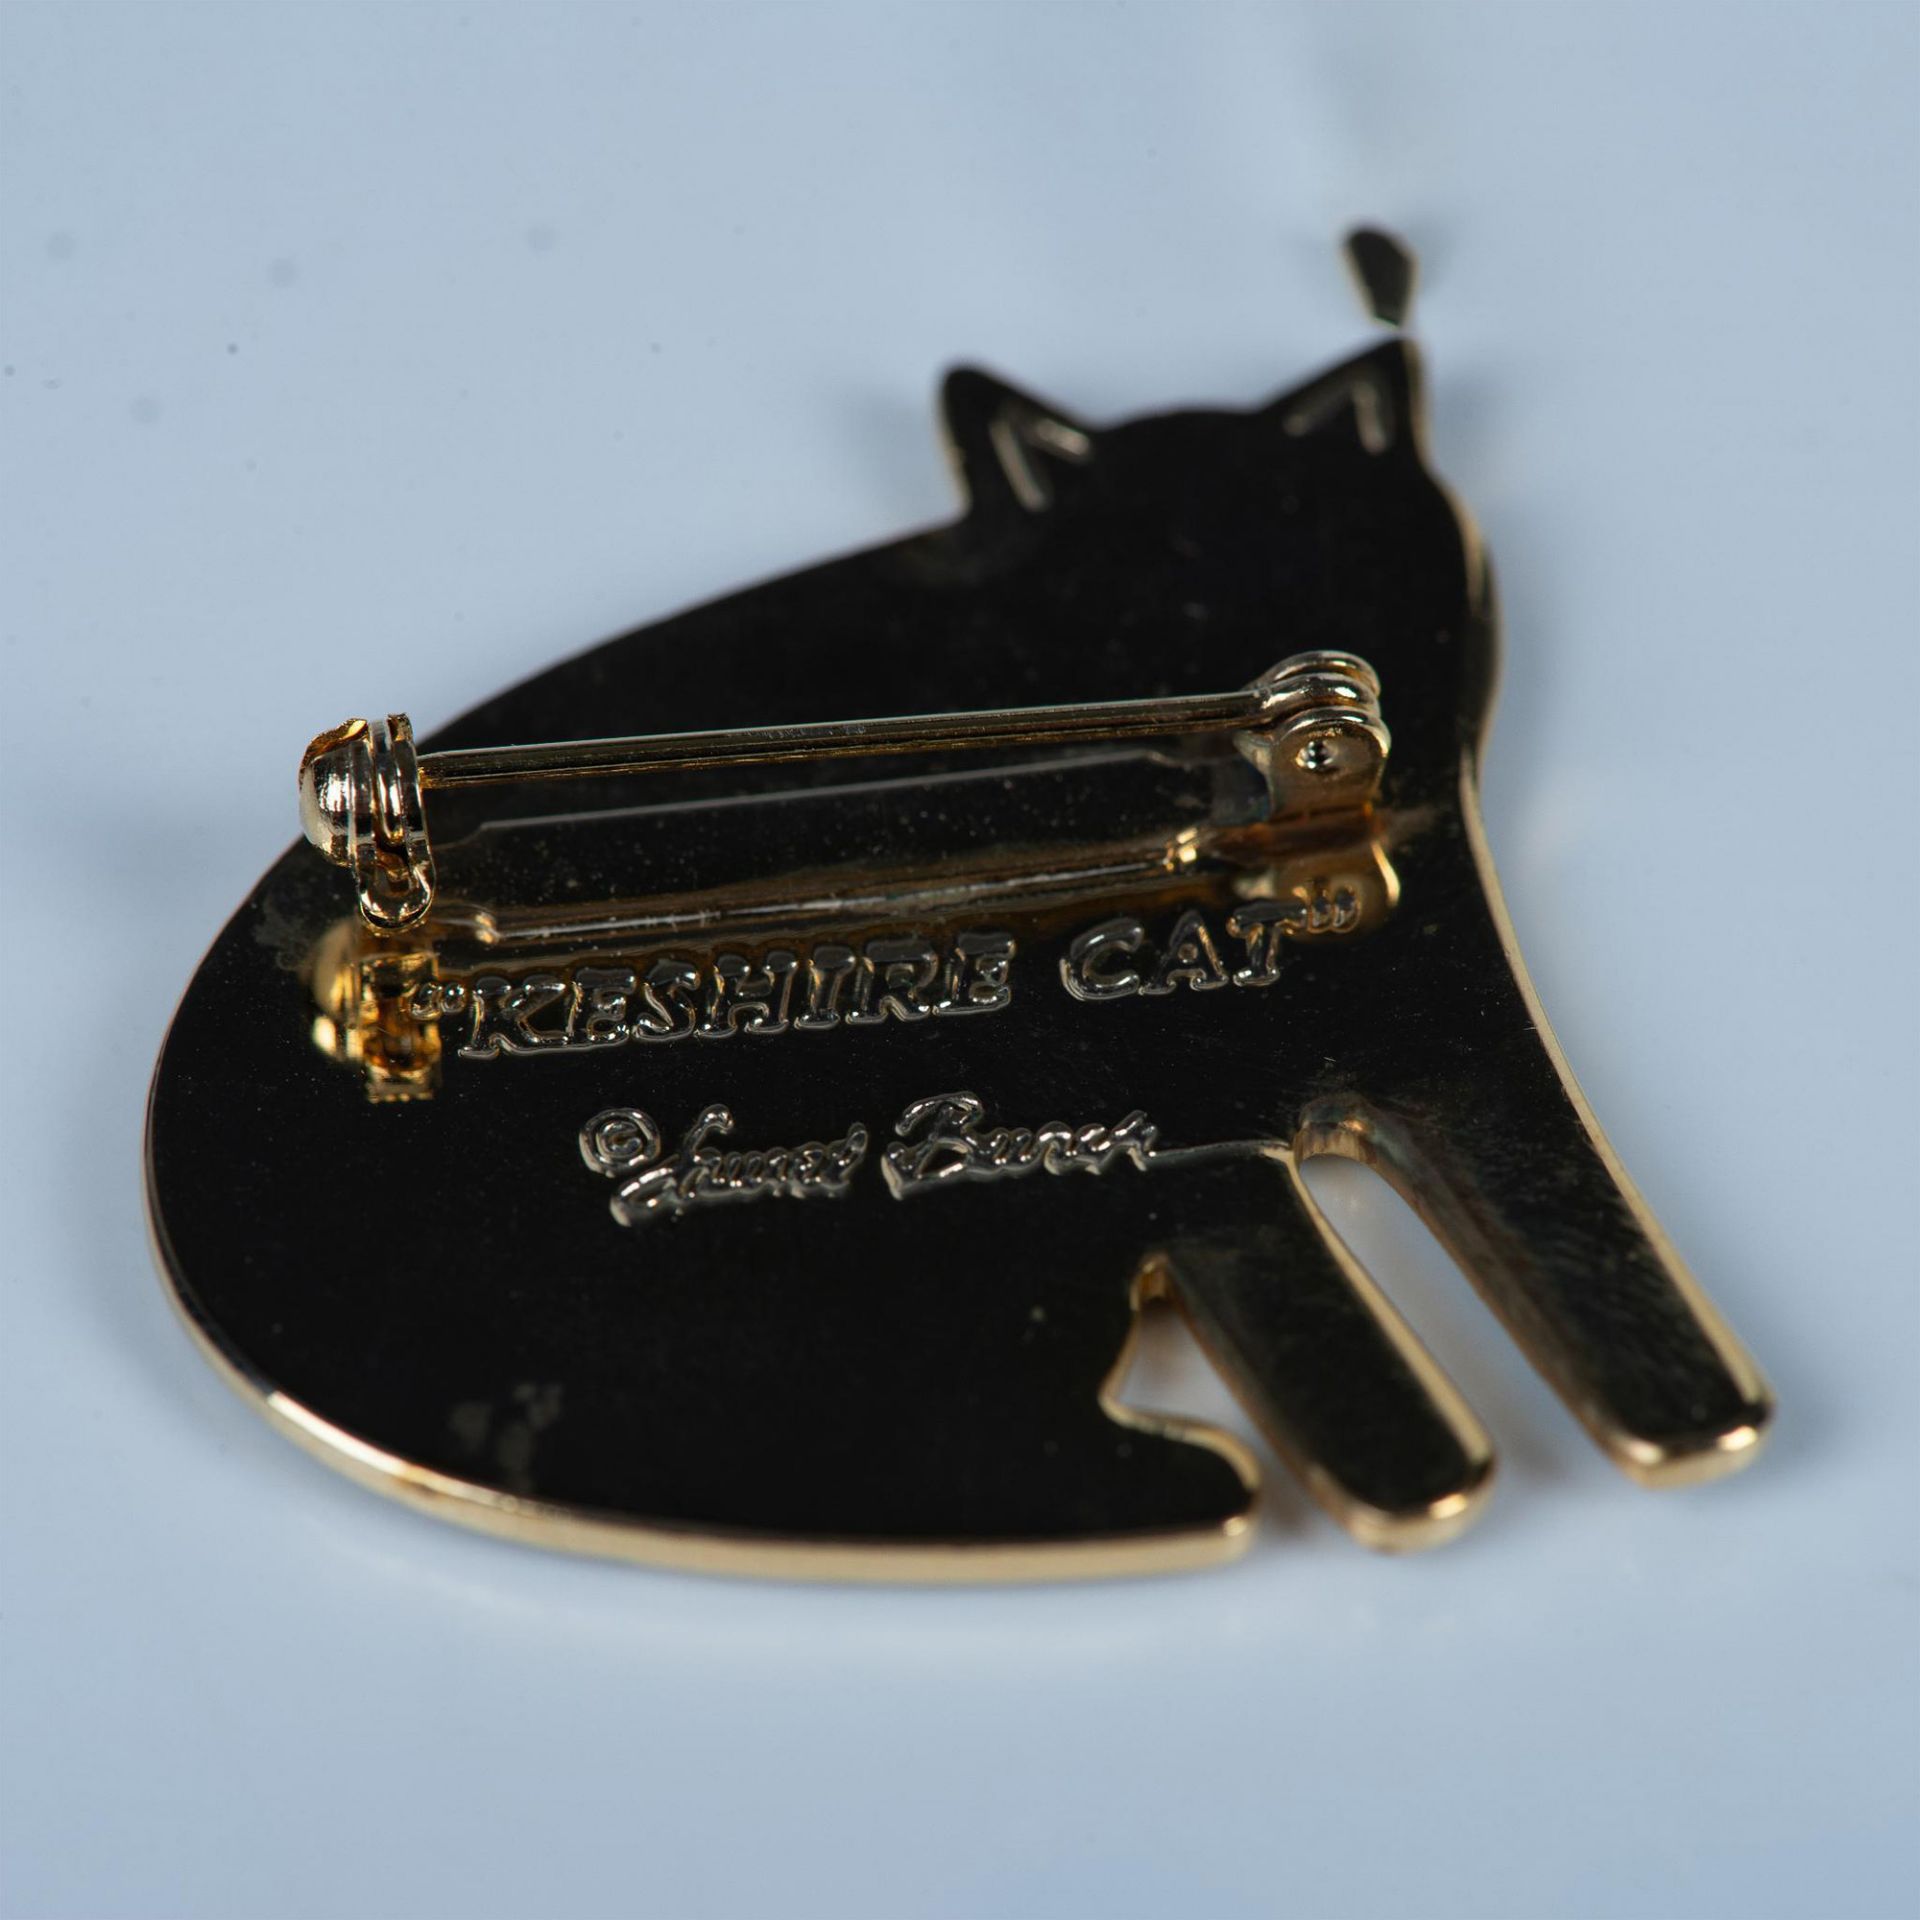 2pc Set Laurel Burch Keshire Cat Pin & Clip-On Earrings - Image 4 of 6